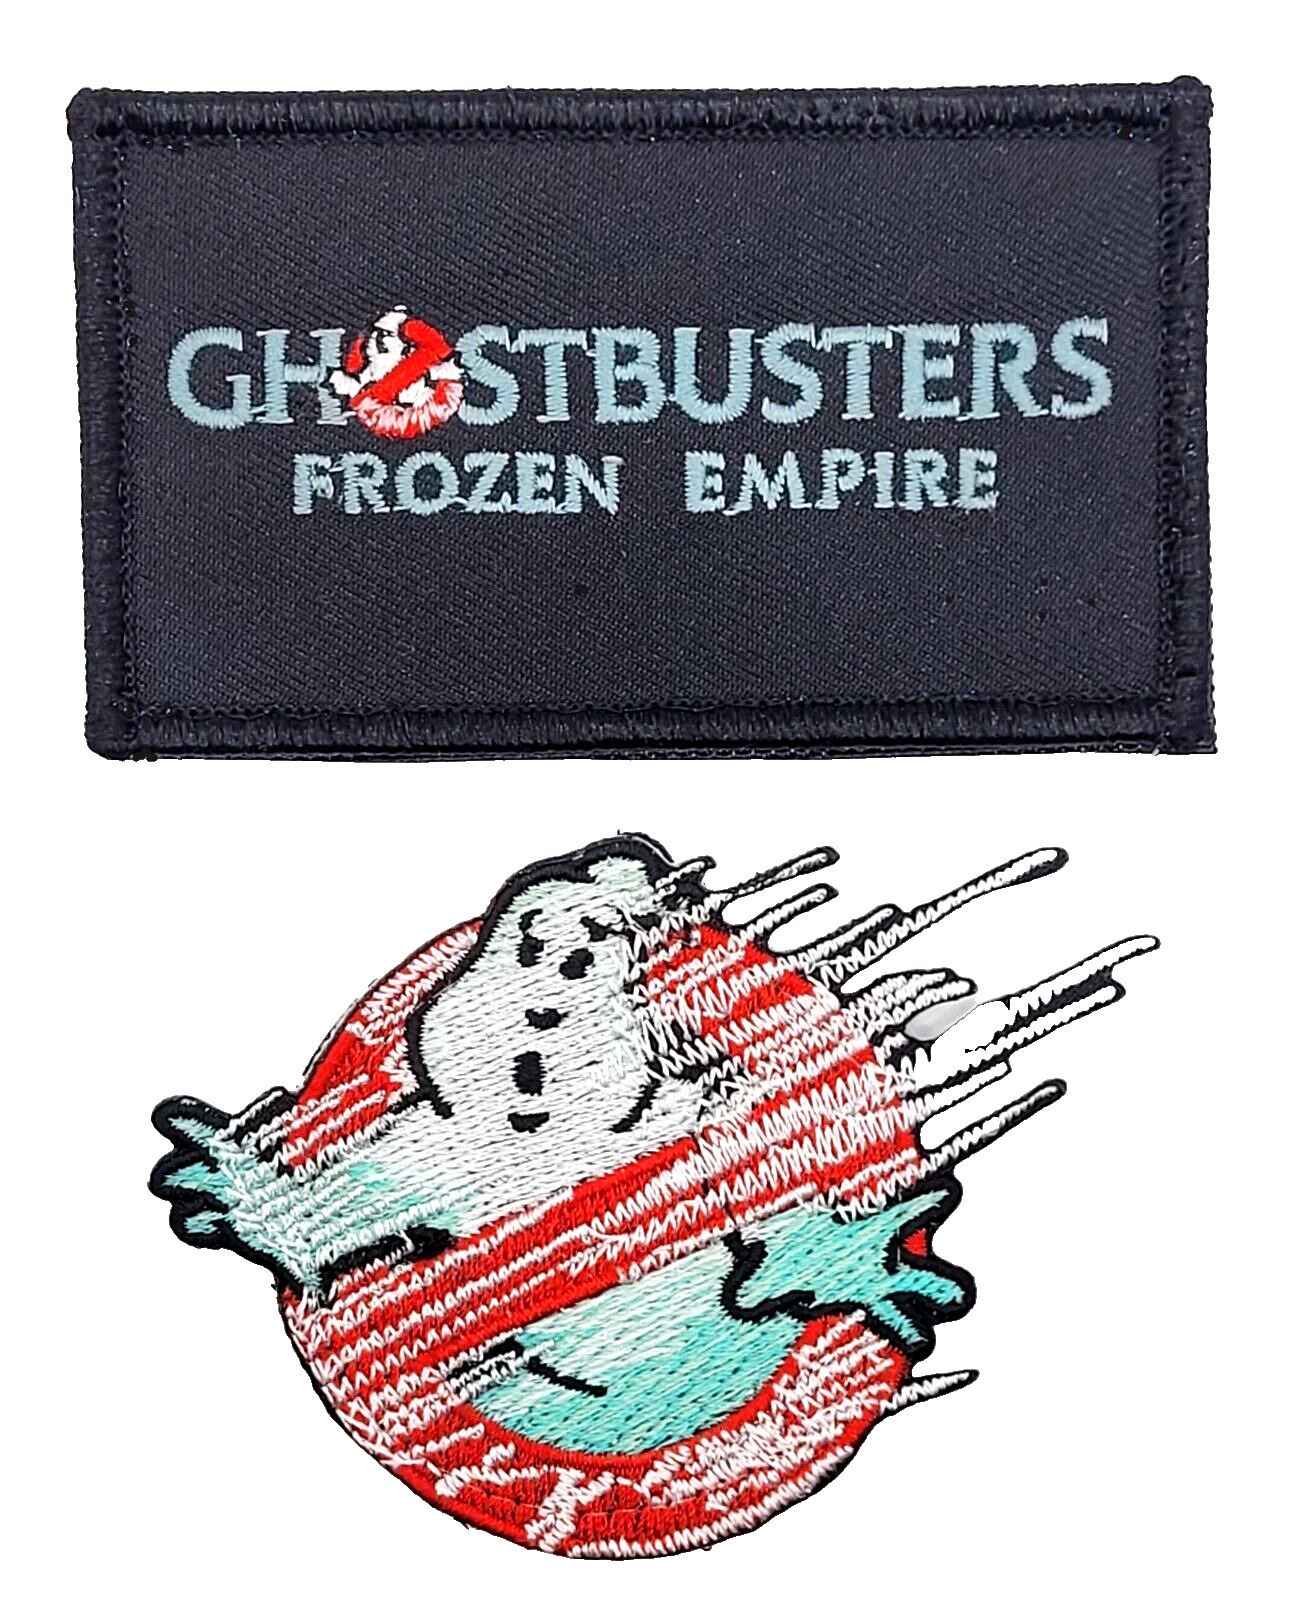 Ghostbusters Frozen Empire Tactical Patch (2pc Bundle Hook Fastener)